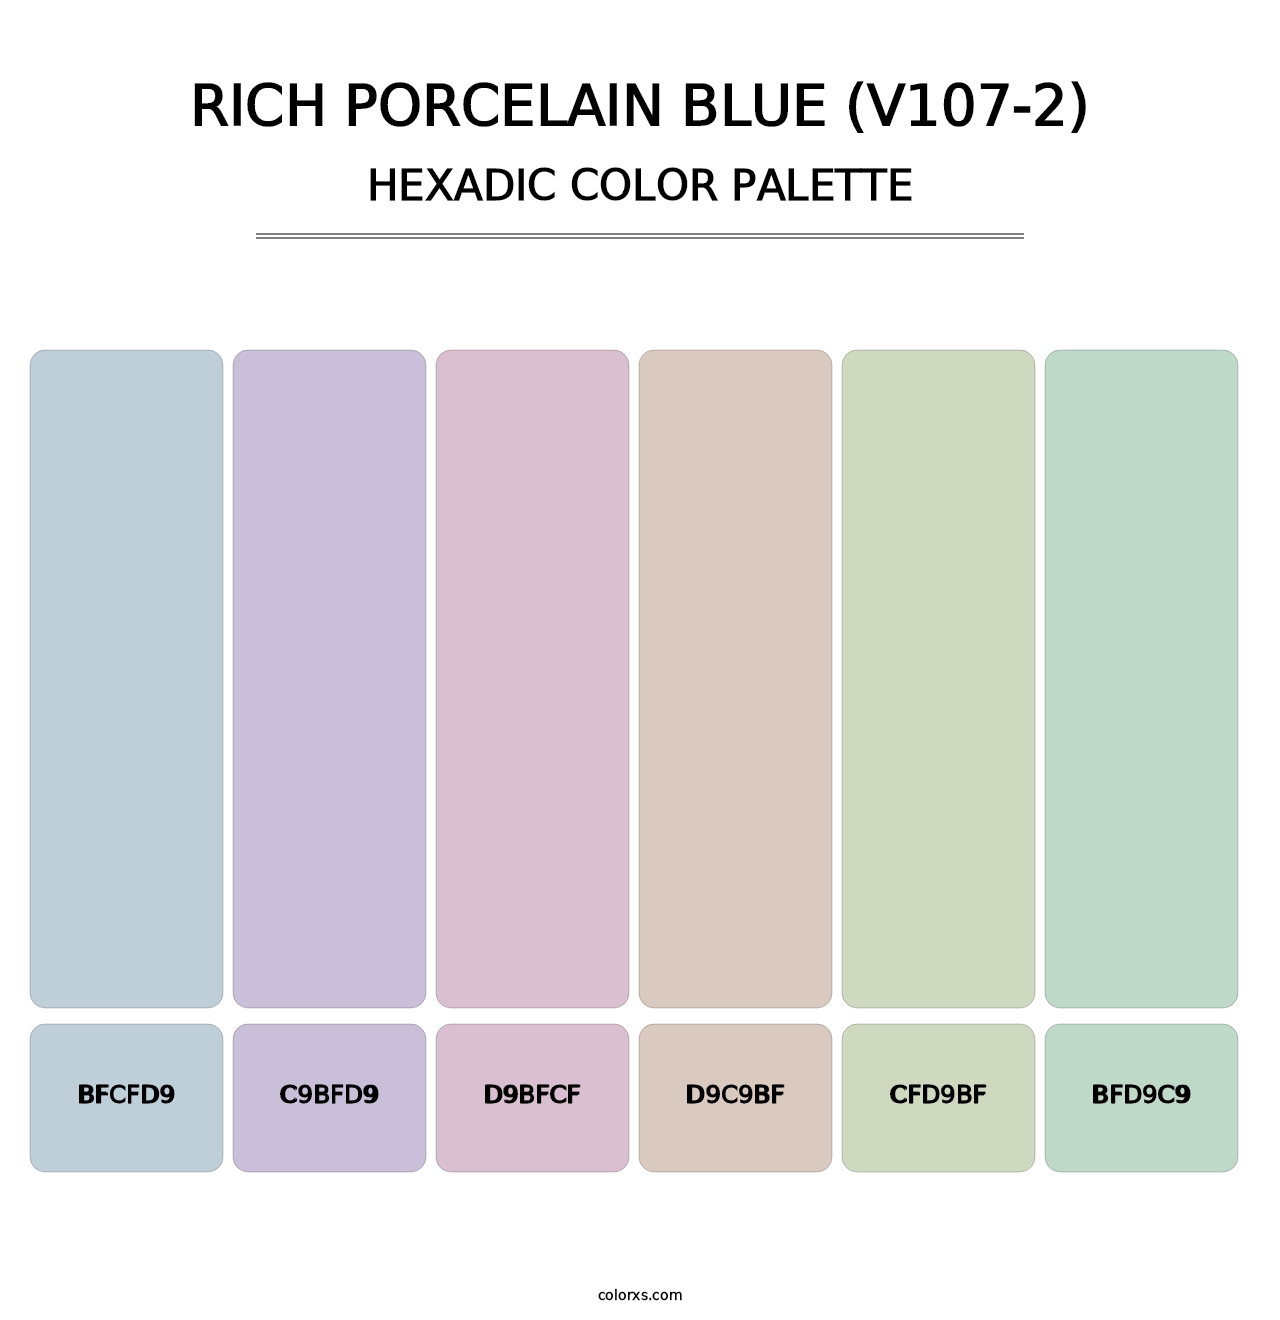 Rich Porcelain Blue (V107-2) - Hexadic Color Palette